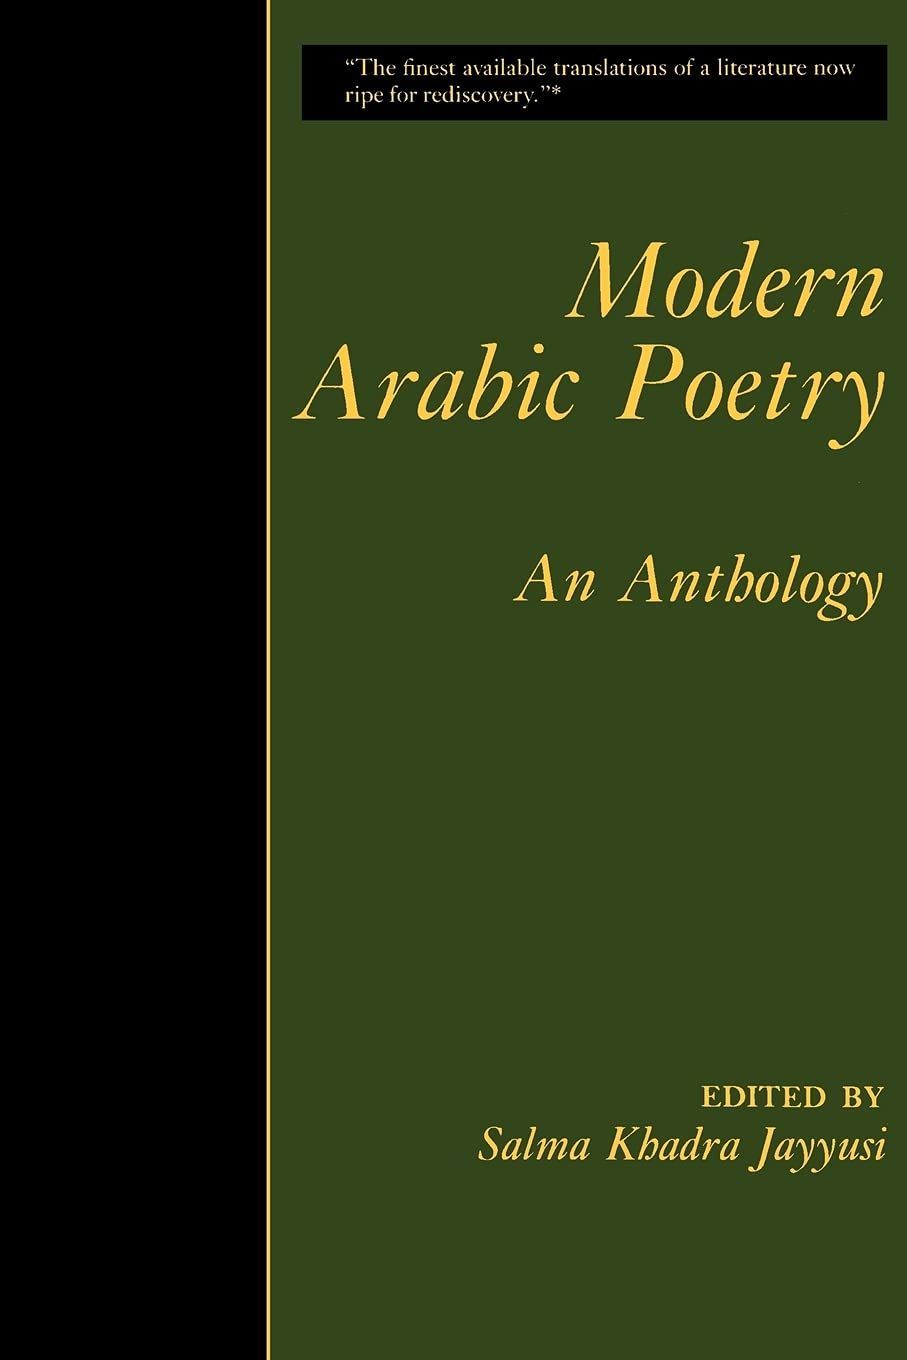 A Century of Writing Back: How Salma Khadra Jayyusi Brought Arabic Literature to the Anglophone World